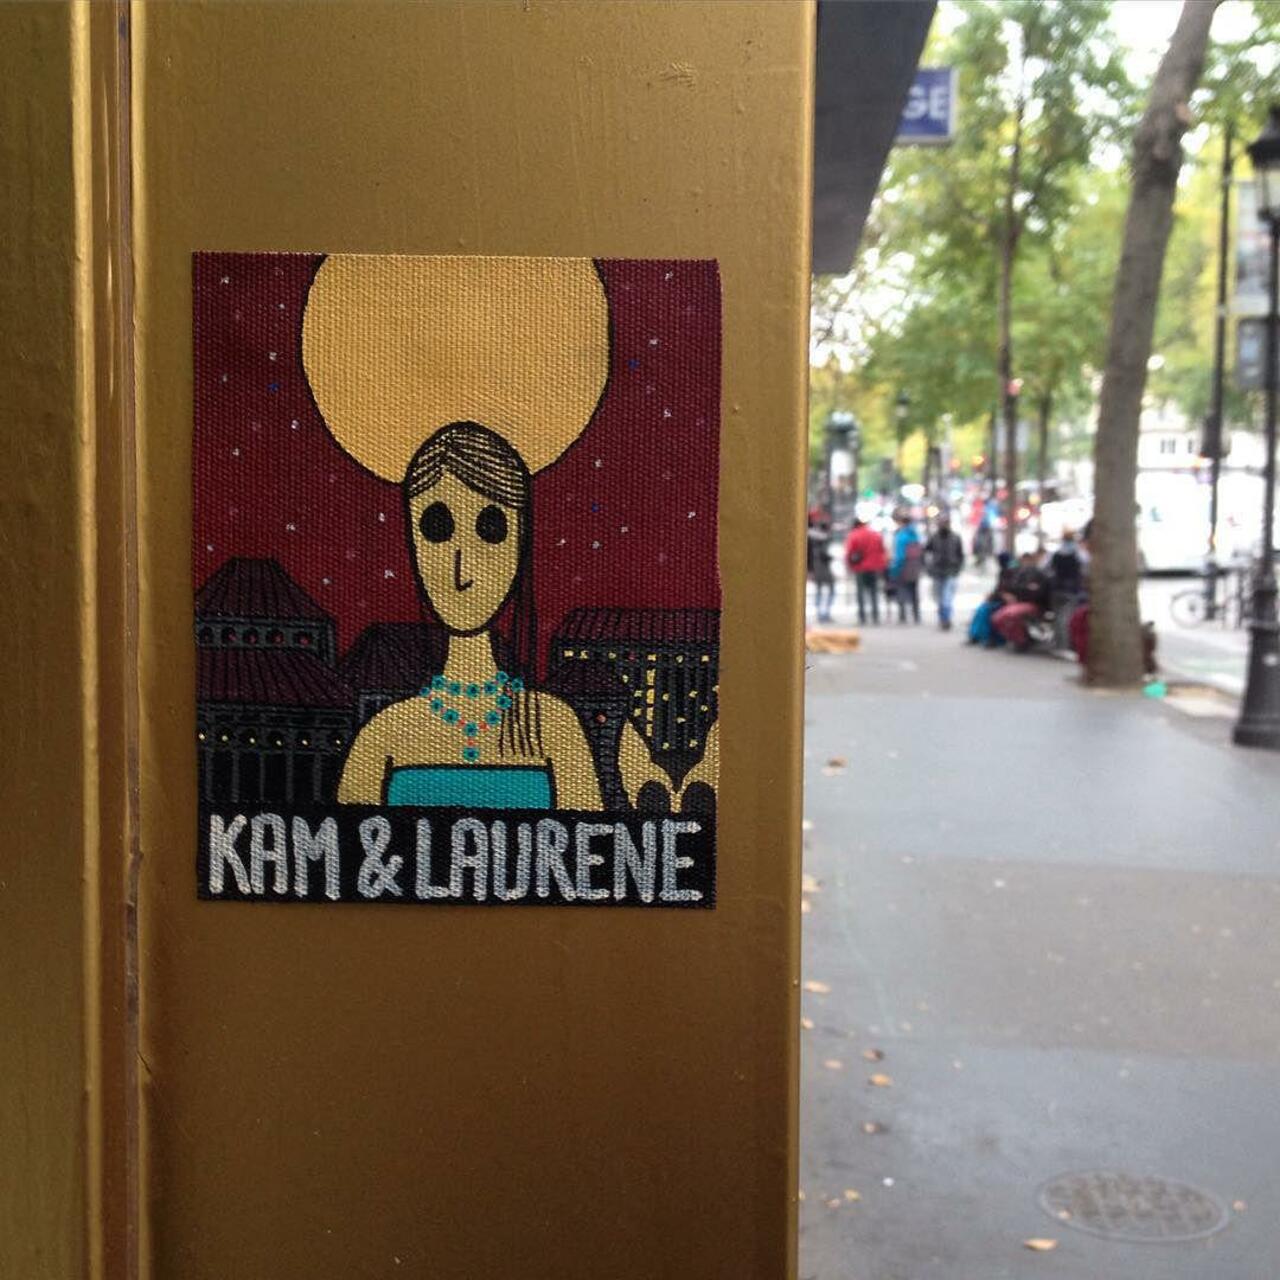 #Paris #graffiti photo by @kamlaurene http://ift.tt/1hNgwjt #StreetArt https://t.co/xp5qKPTuE3